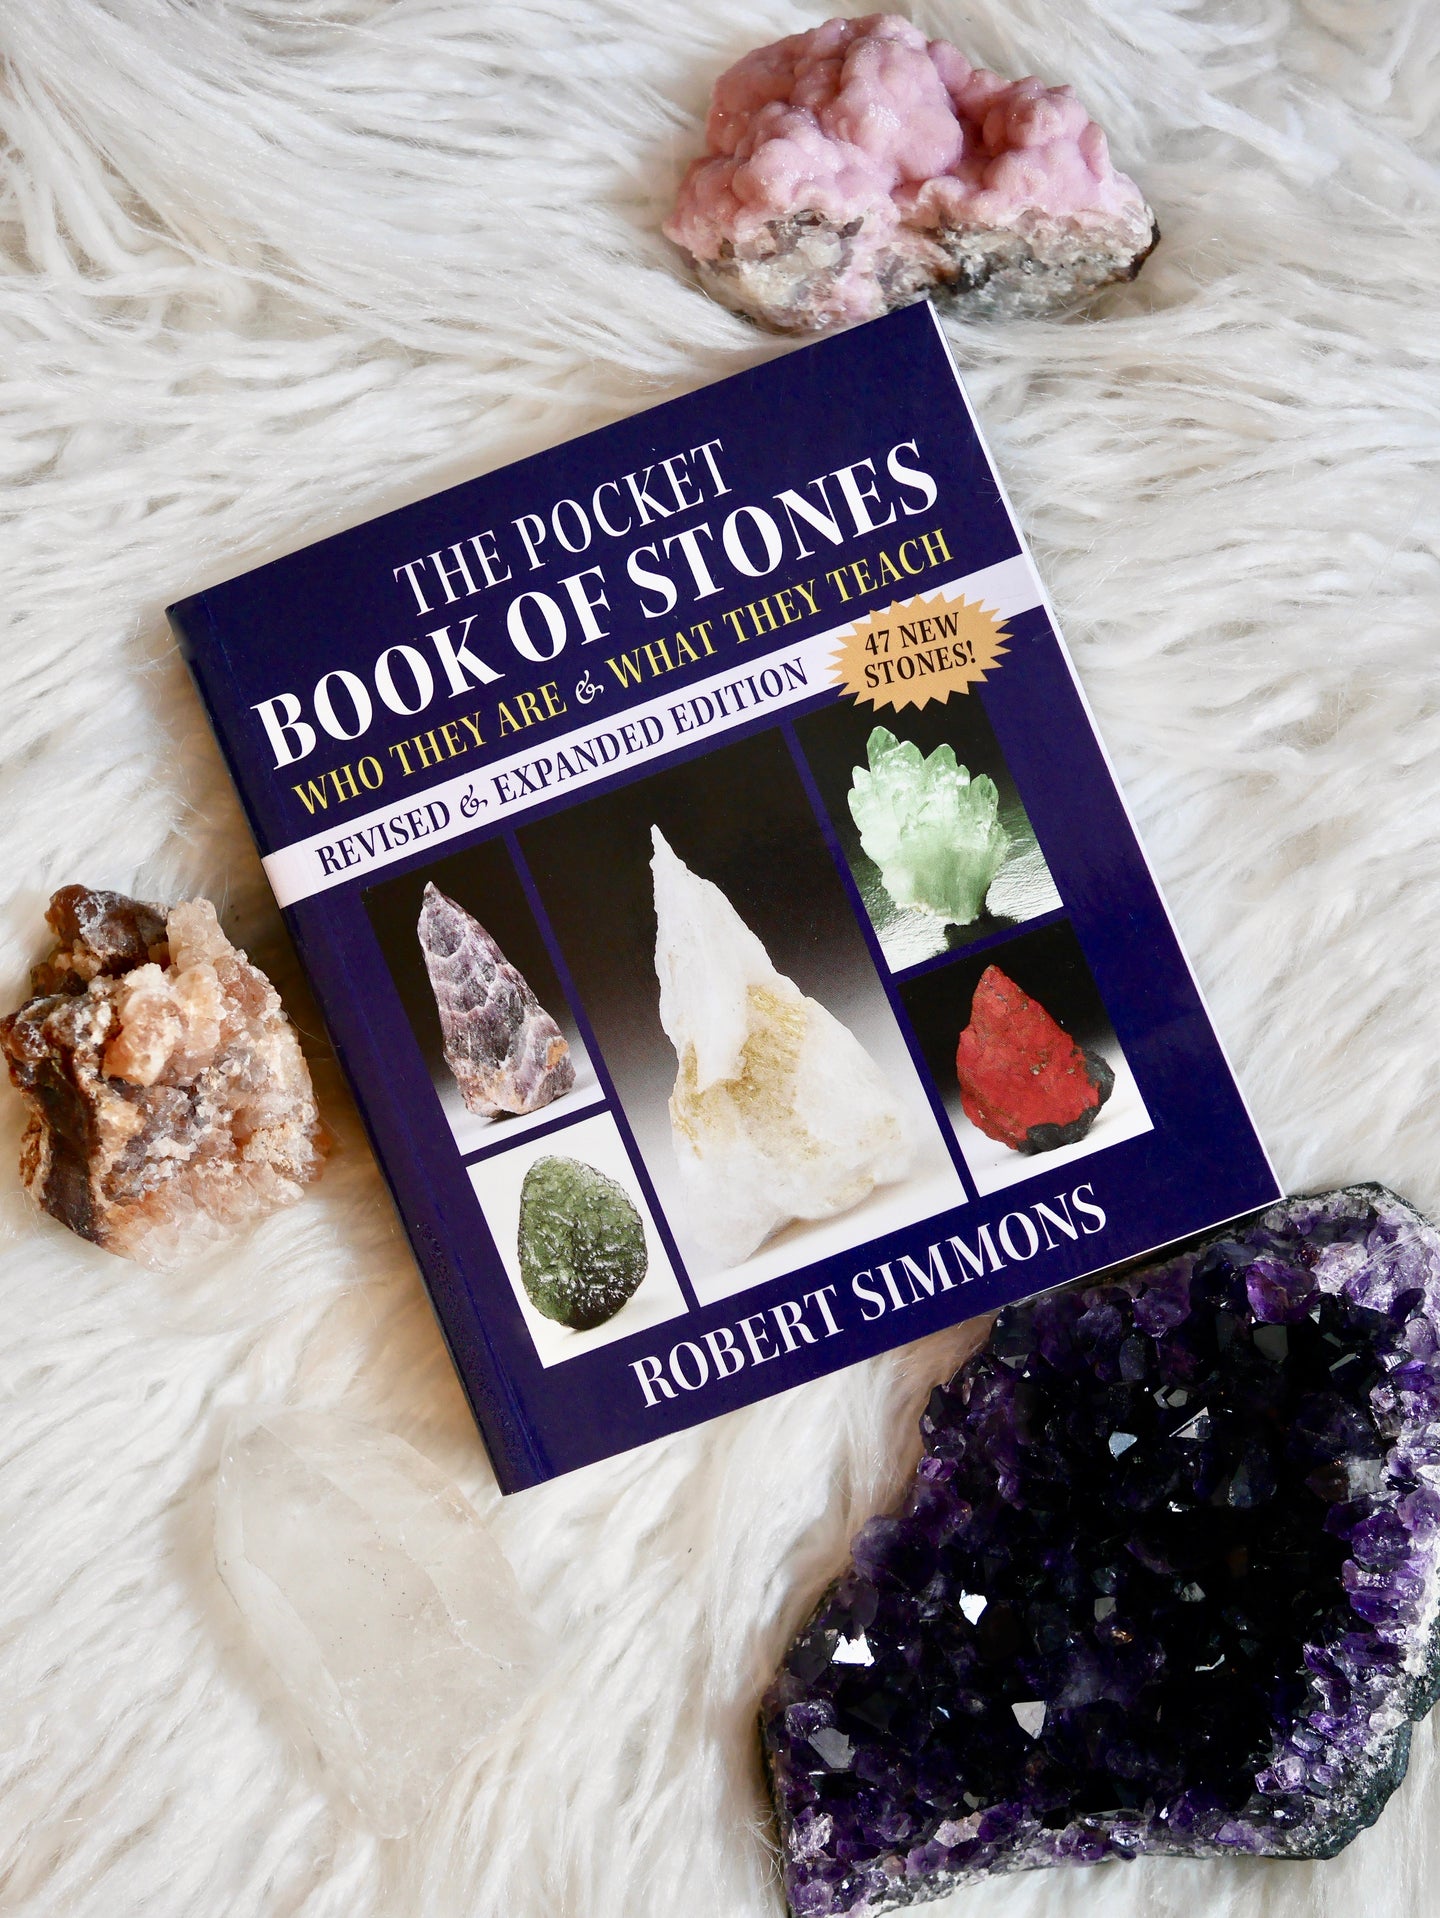 Pocket book of stones